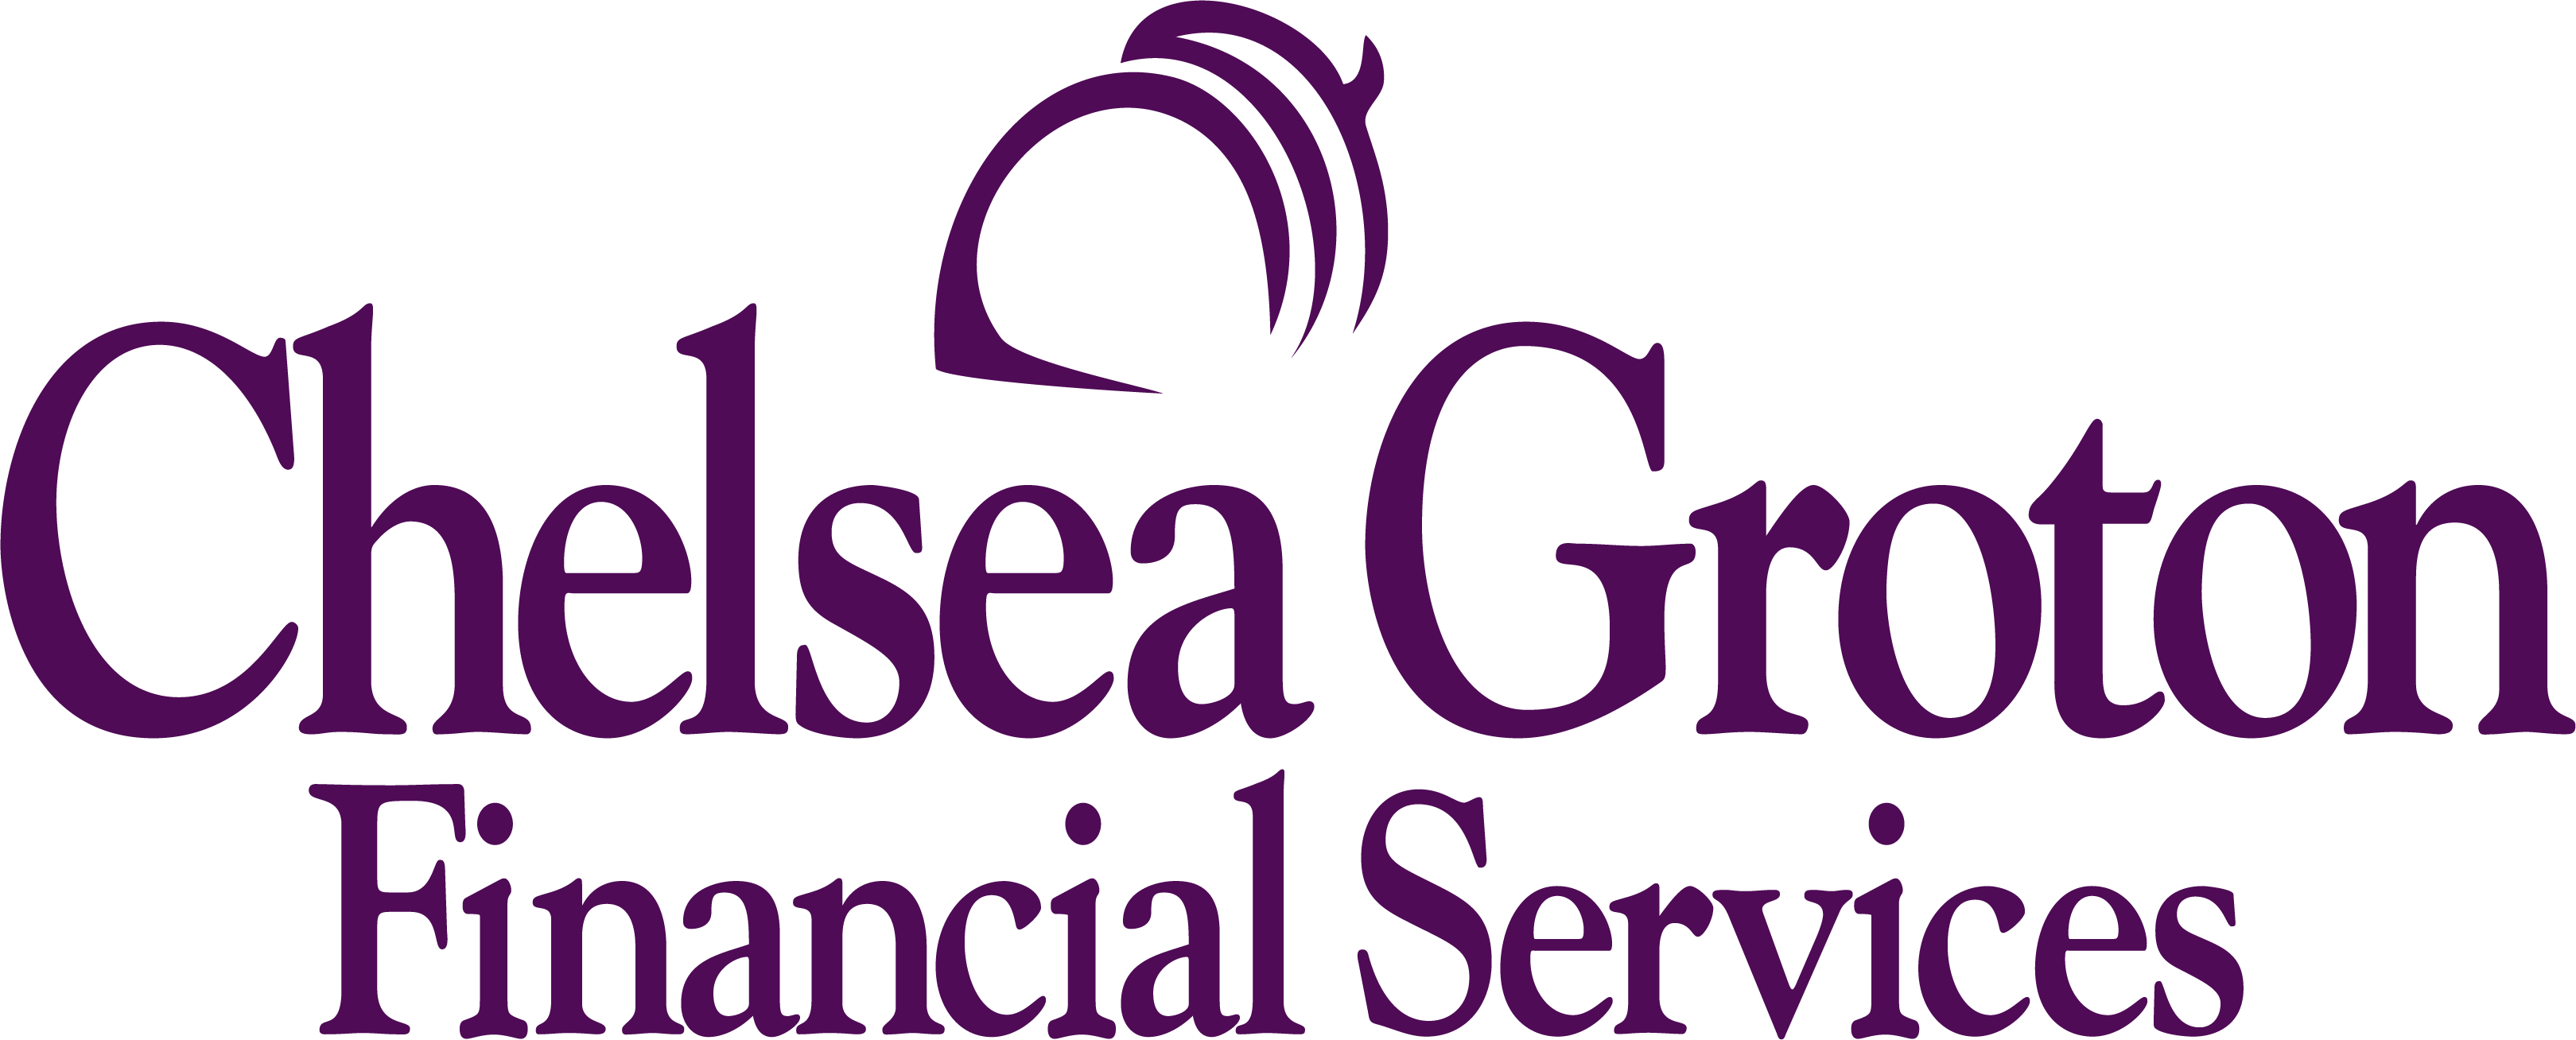 Chelsea Groton Bank Wealth Management logo